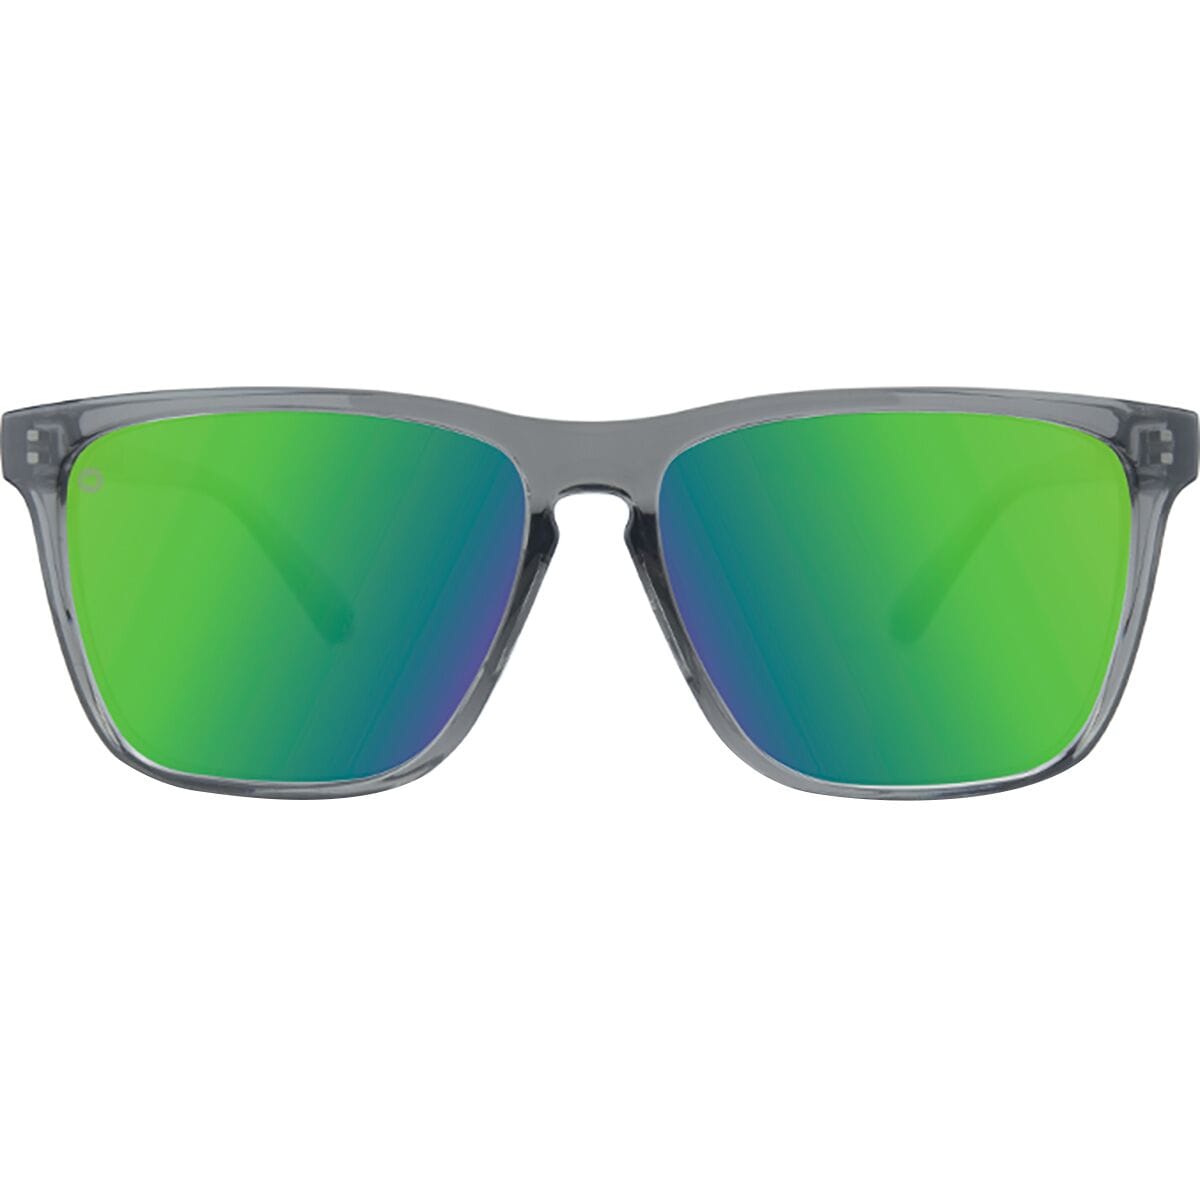 Knockaround Fast Lanes Sport Polarized Sunglasses - Accessories